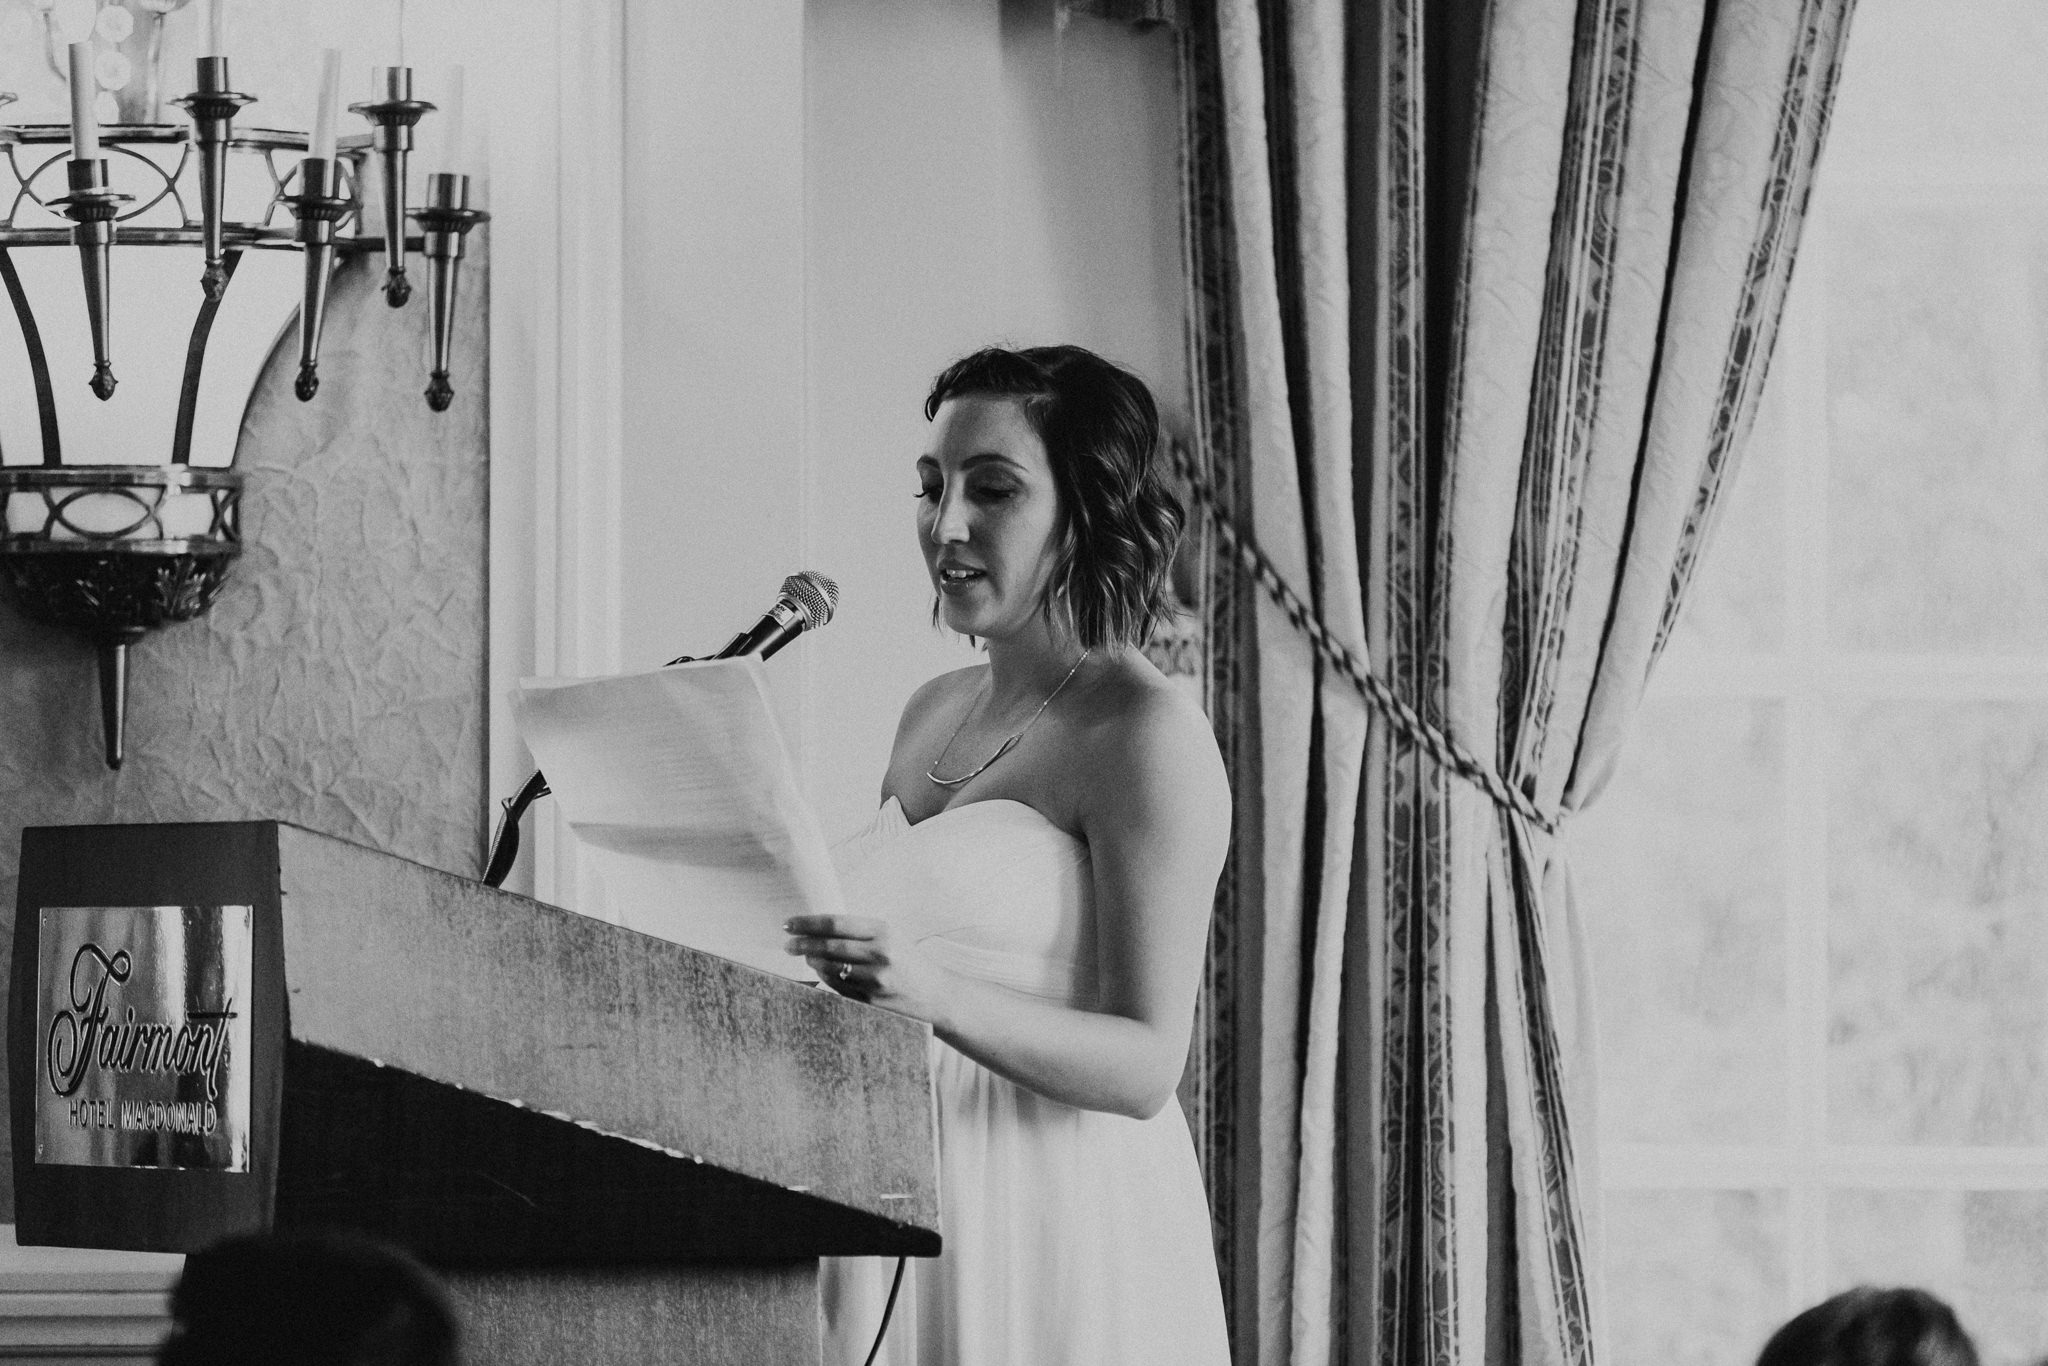 wedding speeches